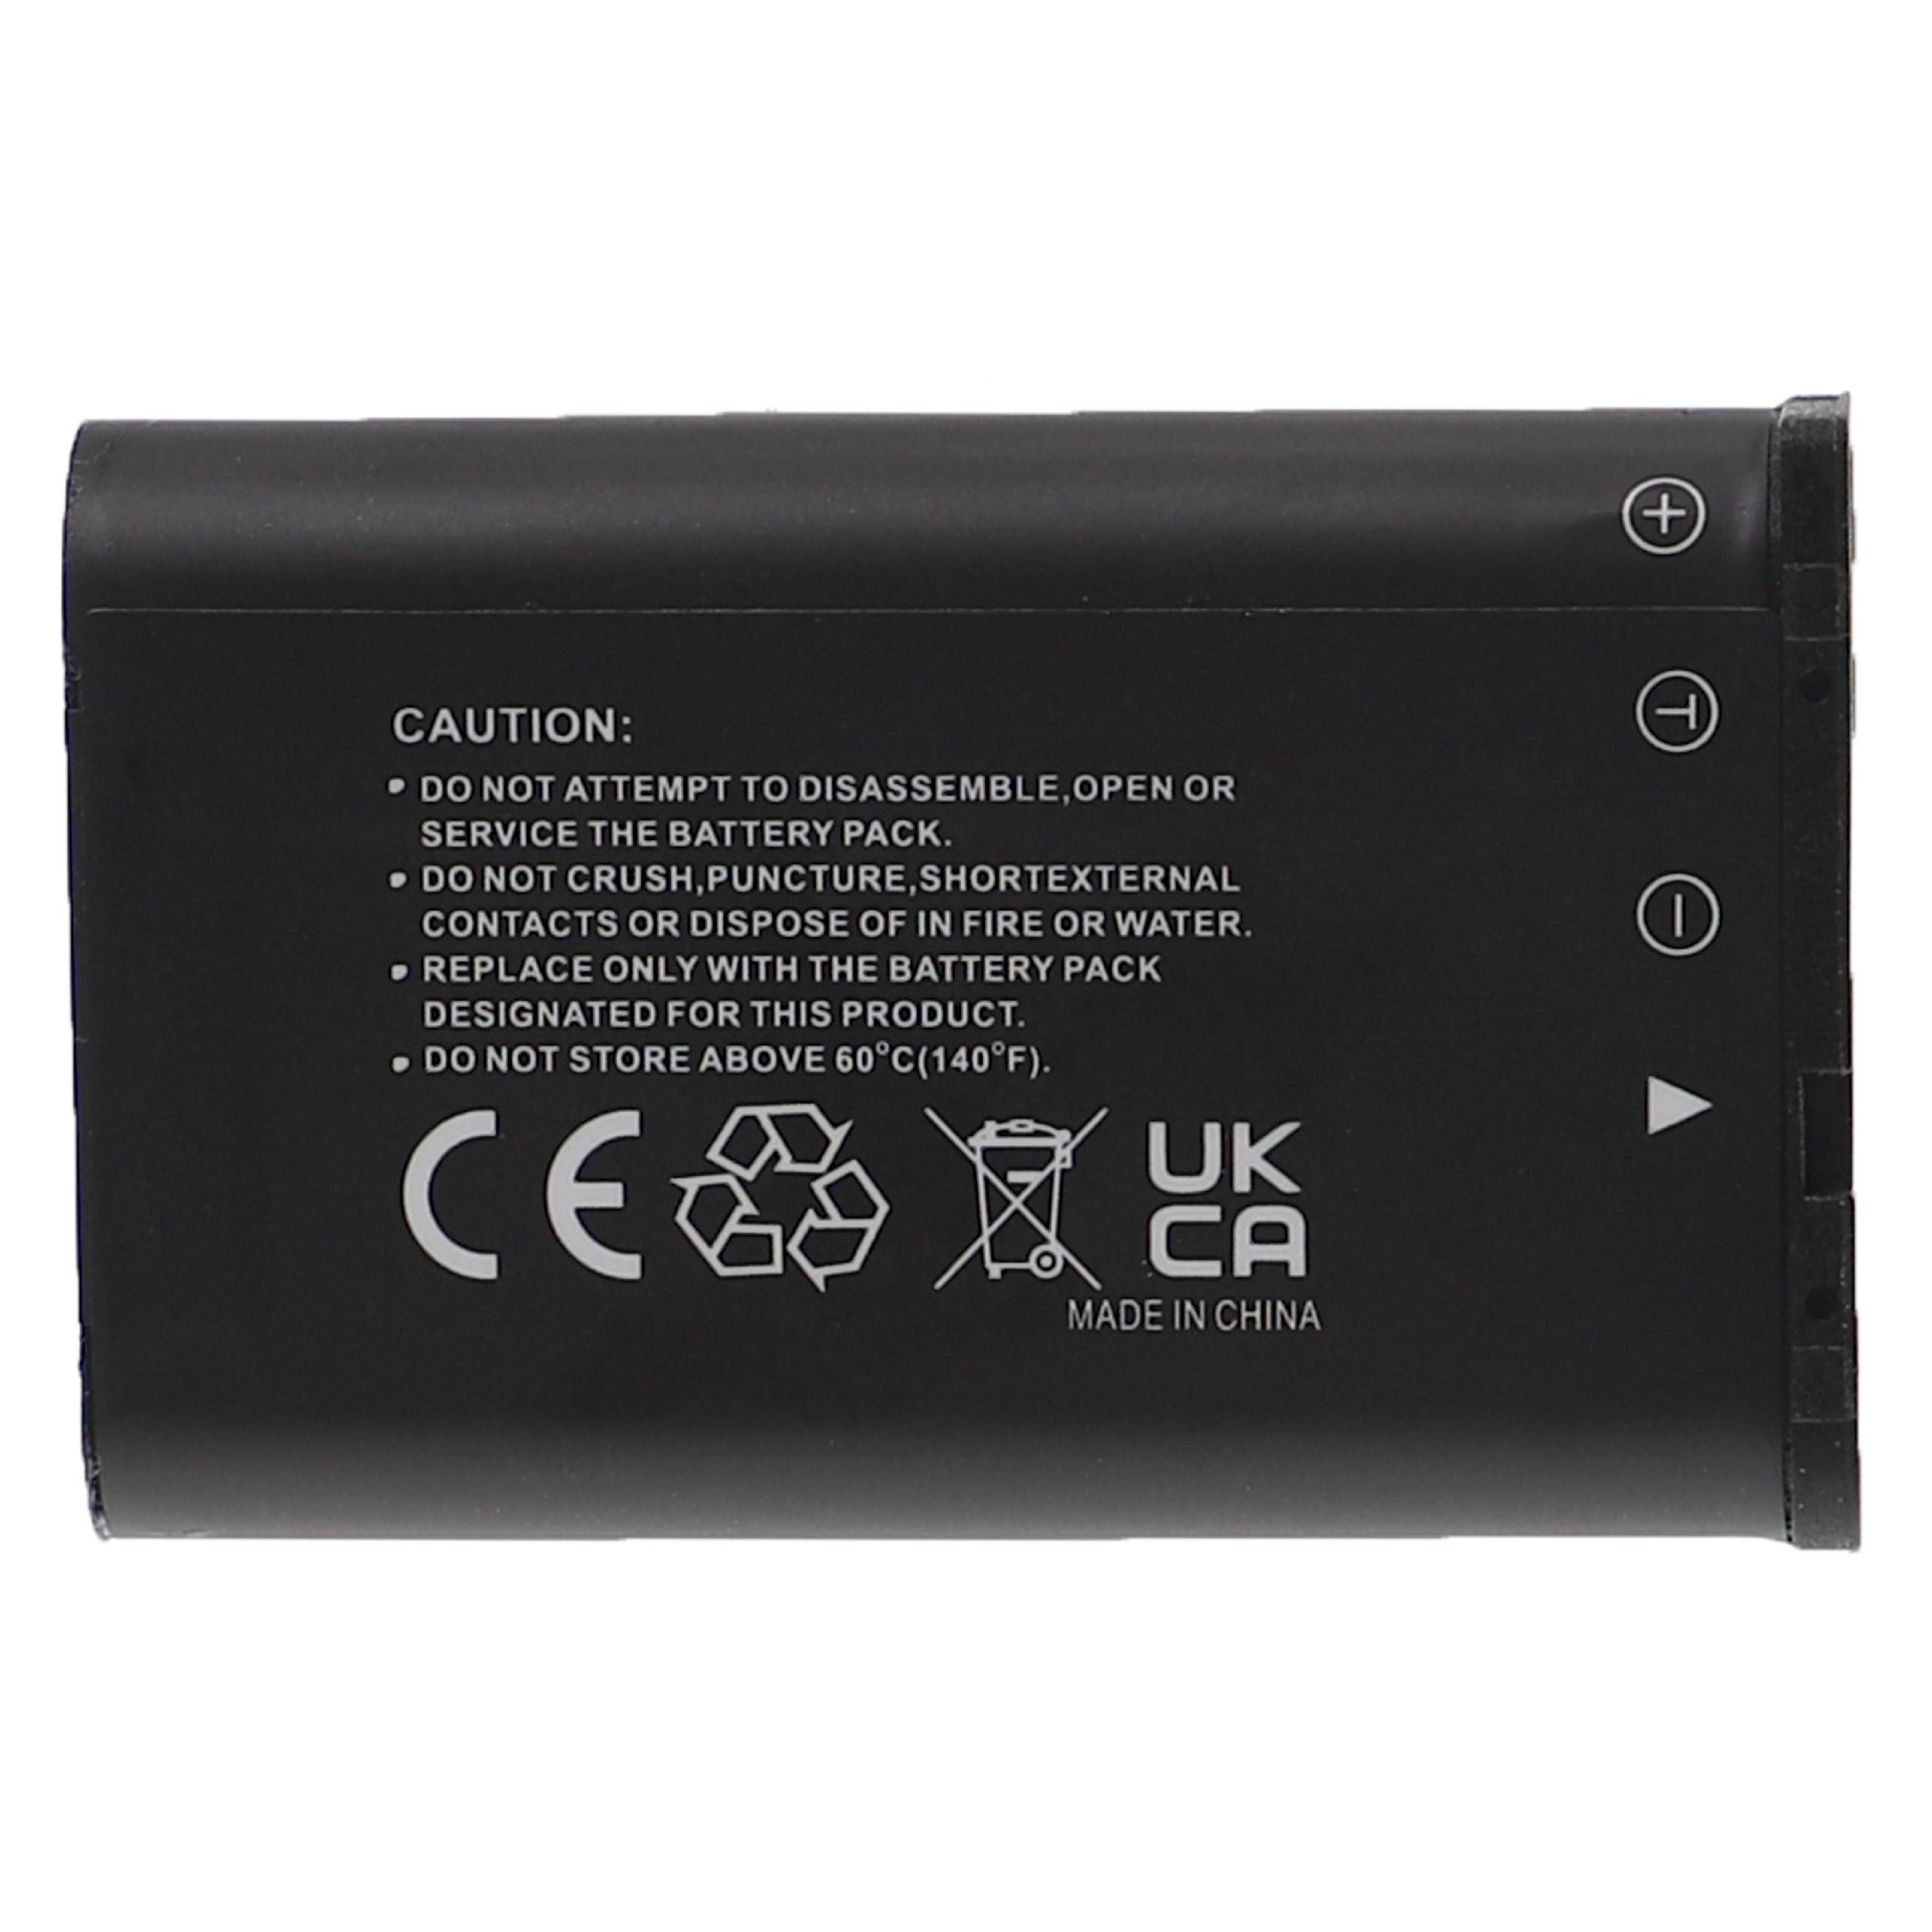 EXTENSILO Volt, Kamera, Li-Ion Akku für für NP-90DBA, - Casio 1800 NP-90 Ersatz 3.7